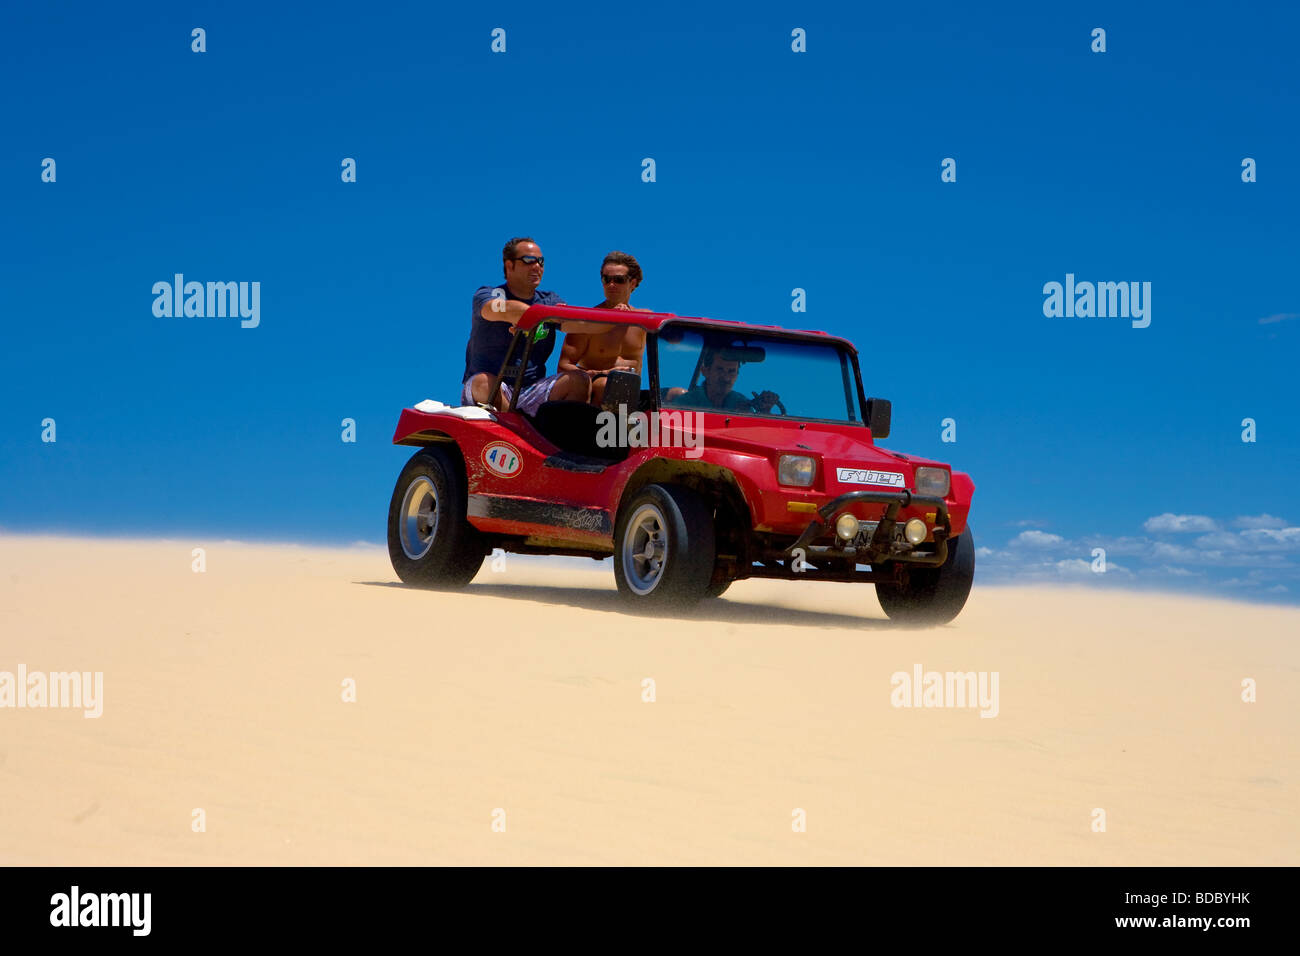 Tourists Riding A Beach Buggy On Sand Dunes Mundau Brazil Stock Photo